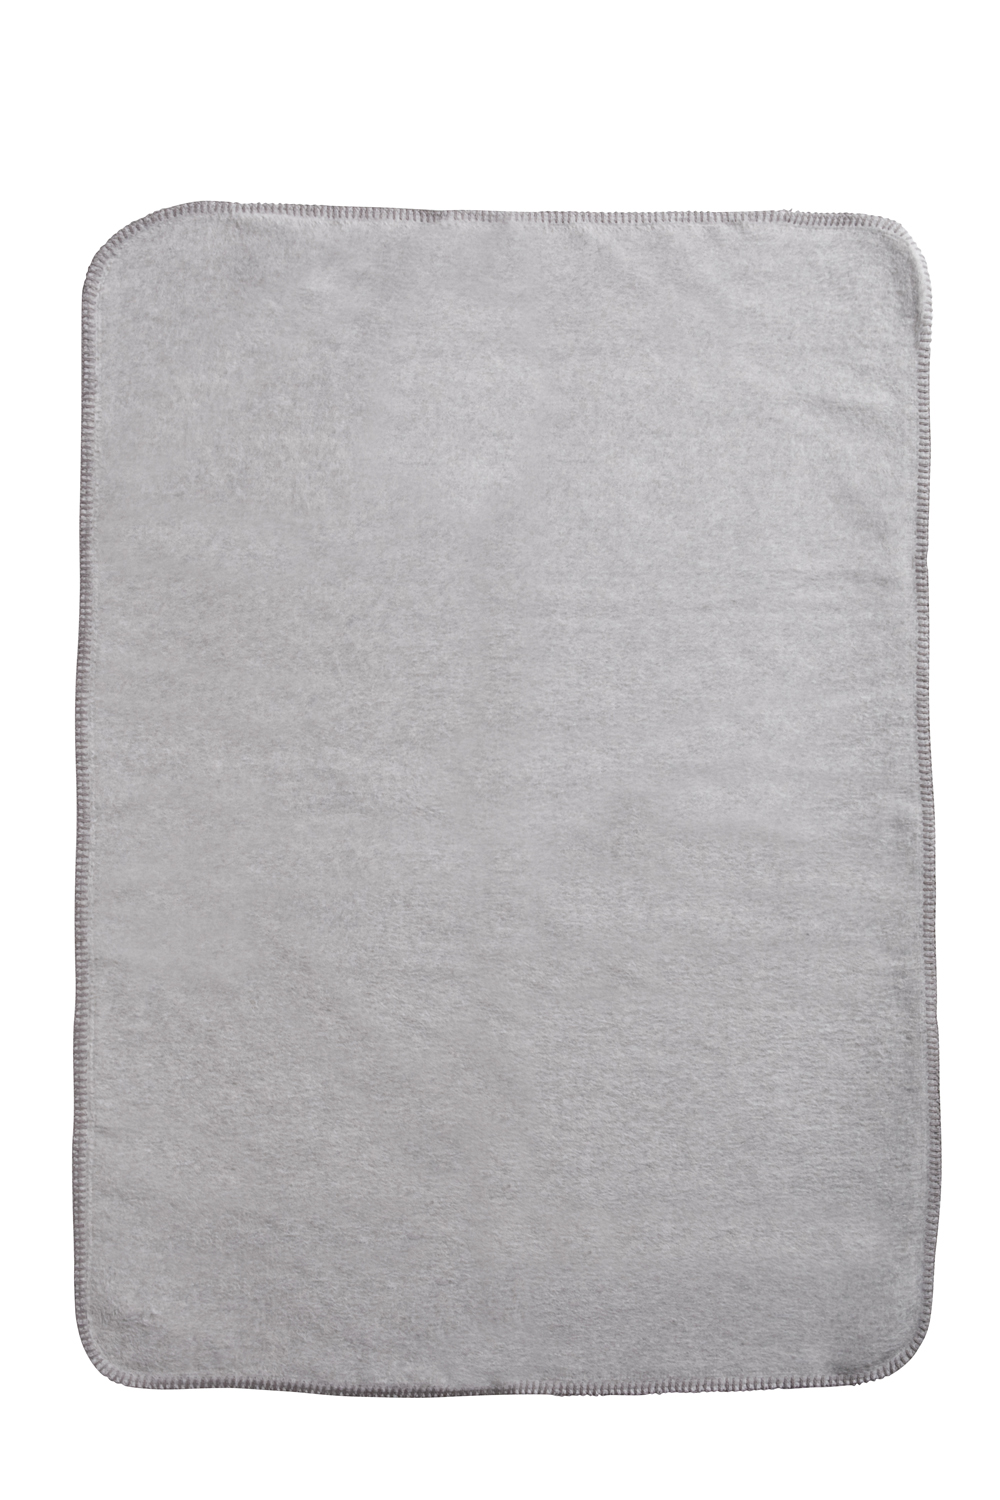 Ledikant deken Uni - grey melange - 100x150cm